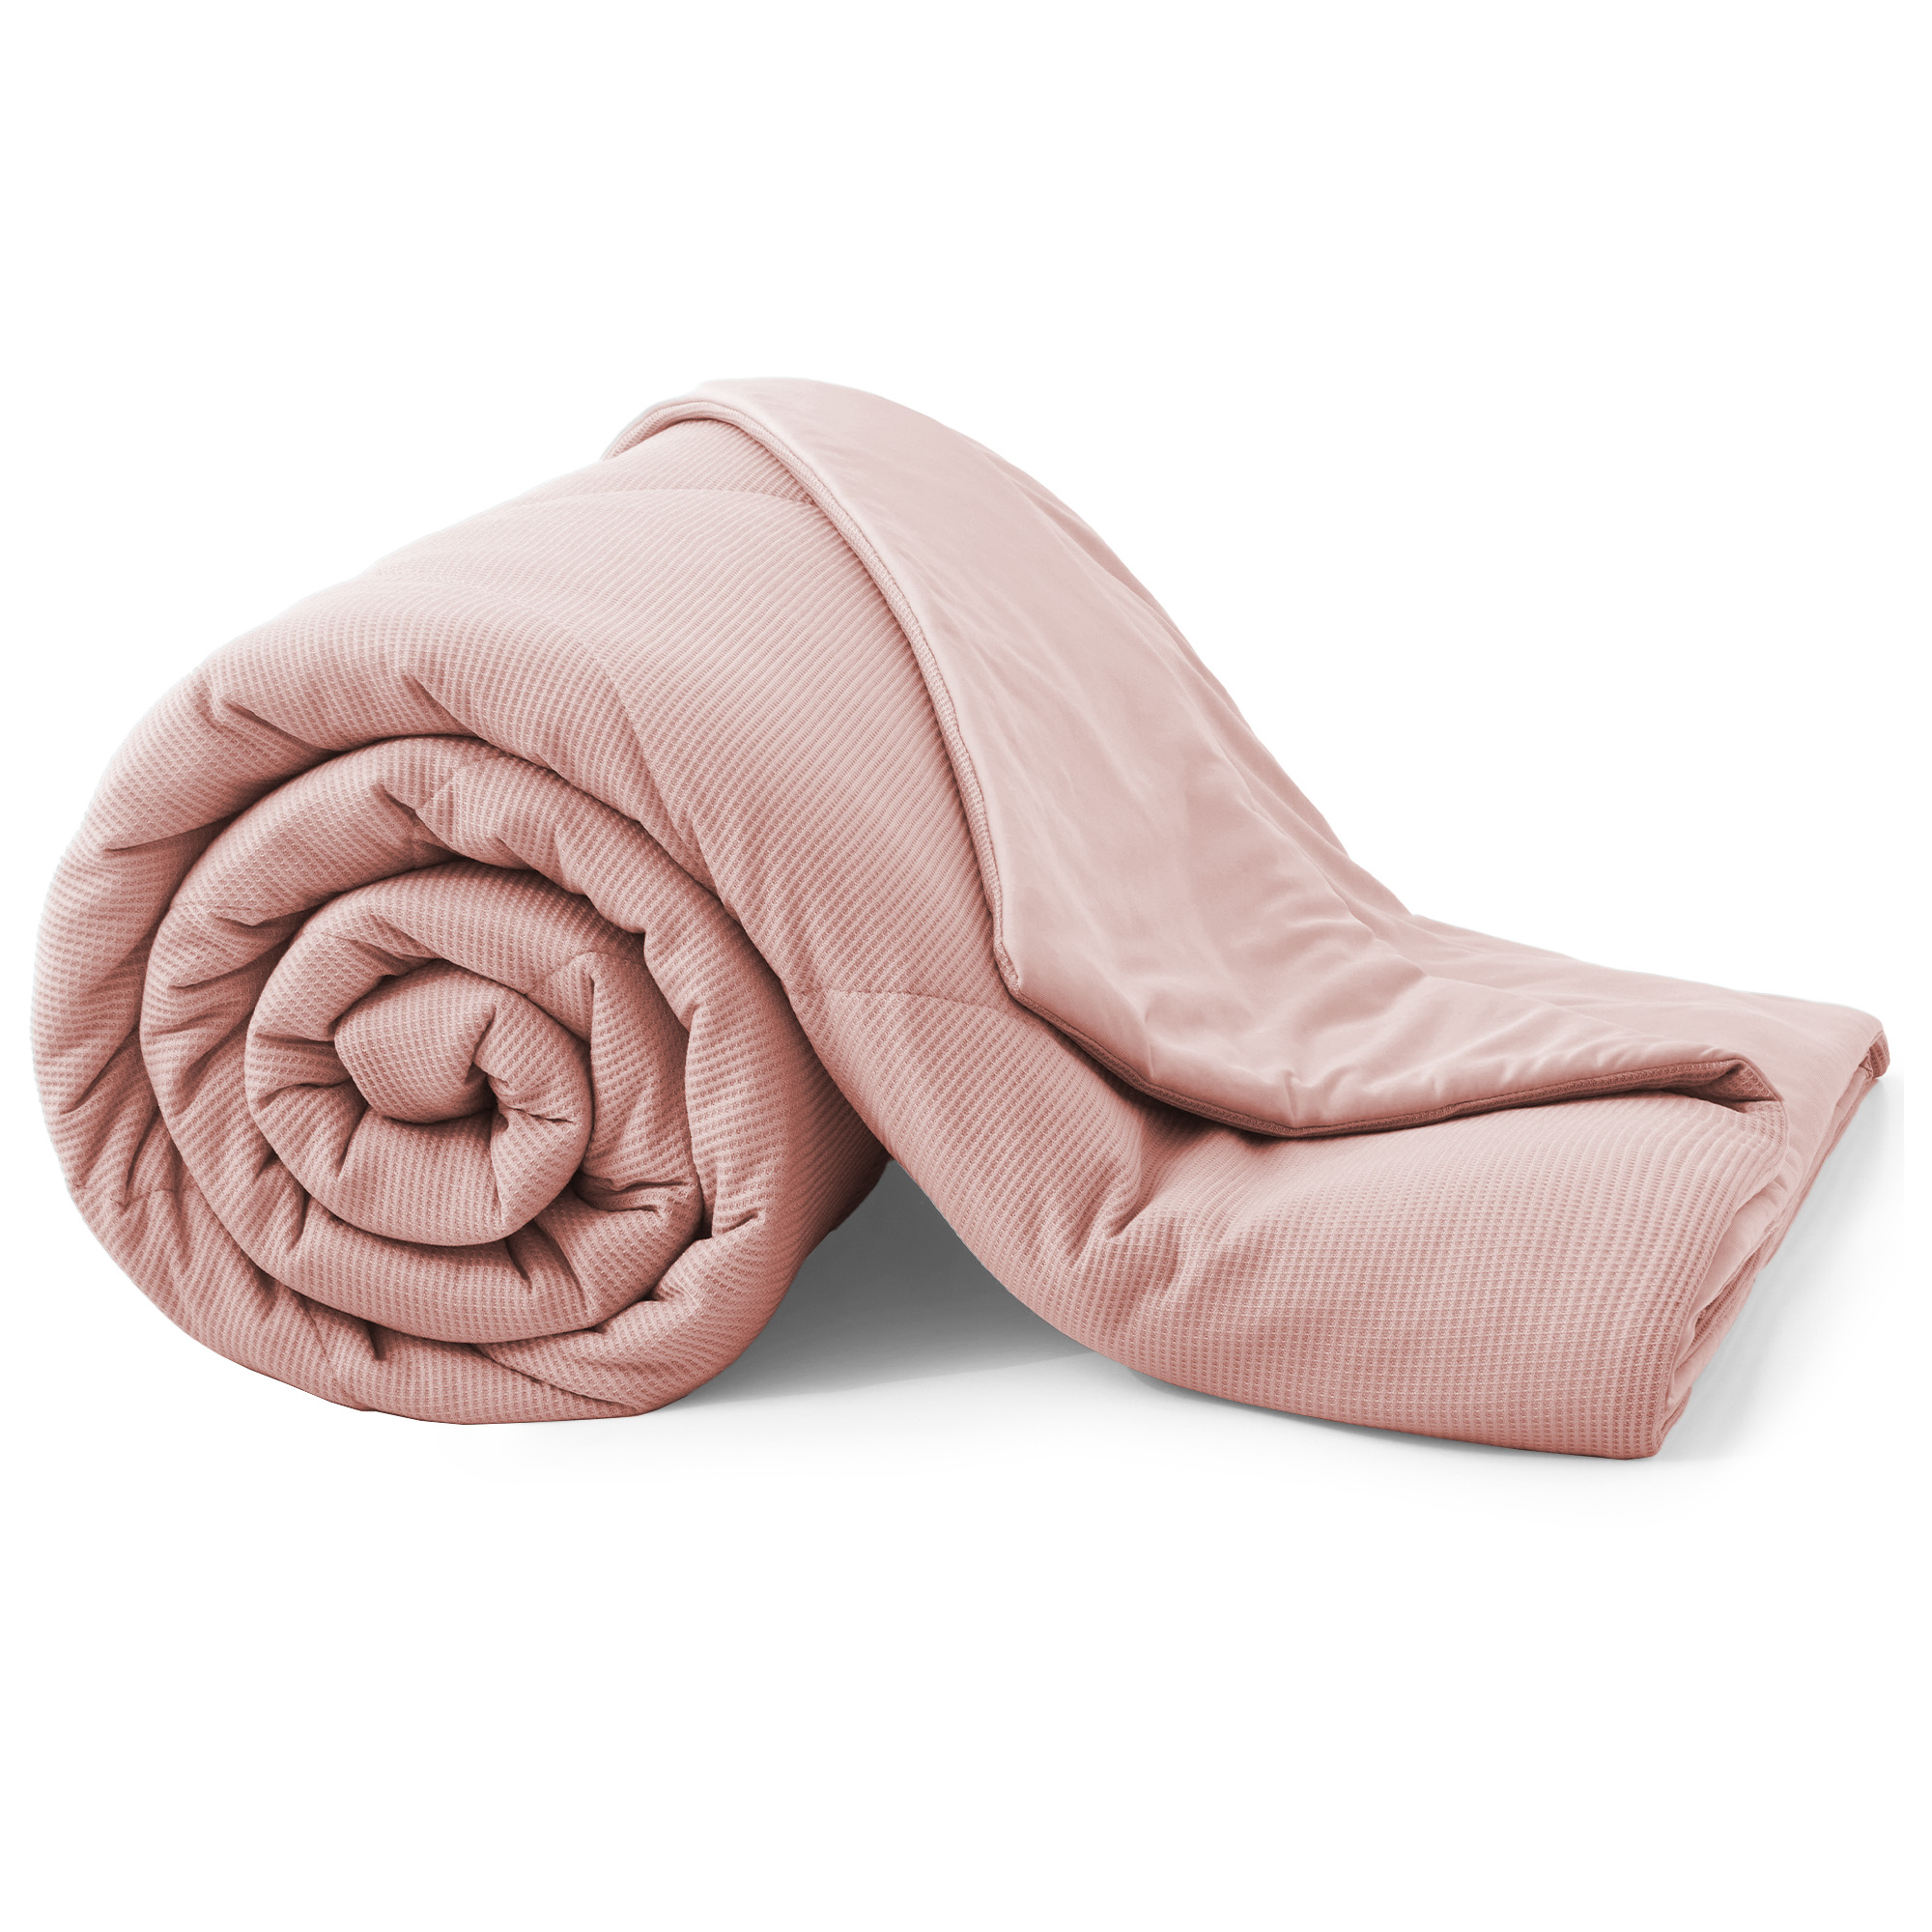 Oversize Blanket, 108 X 90 King Size Soft Washable Reversible Blanket, Pink